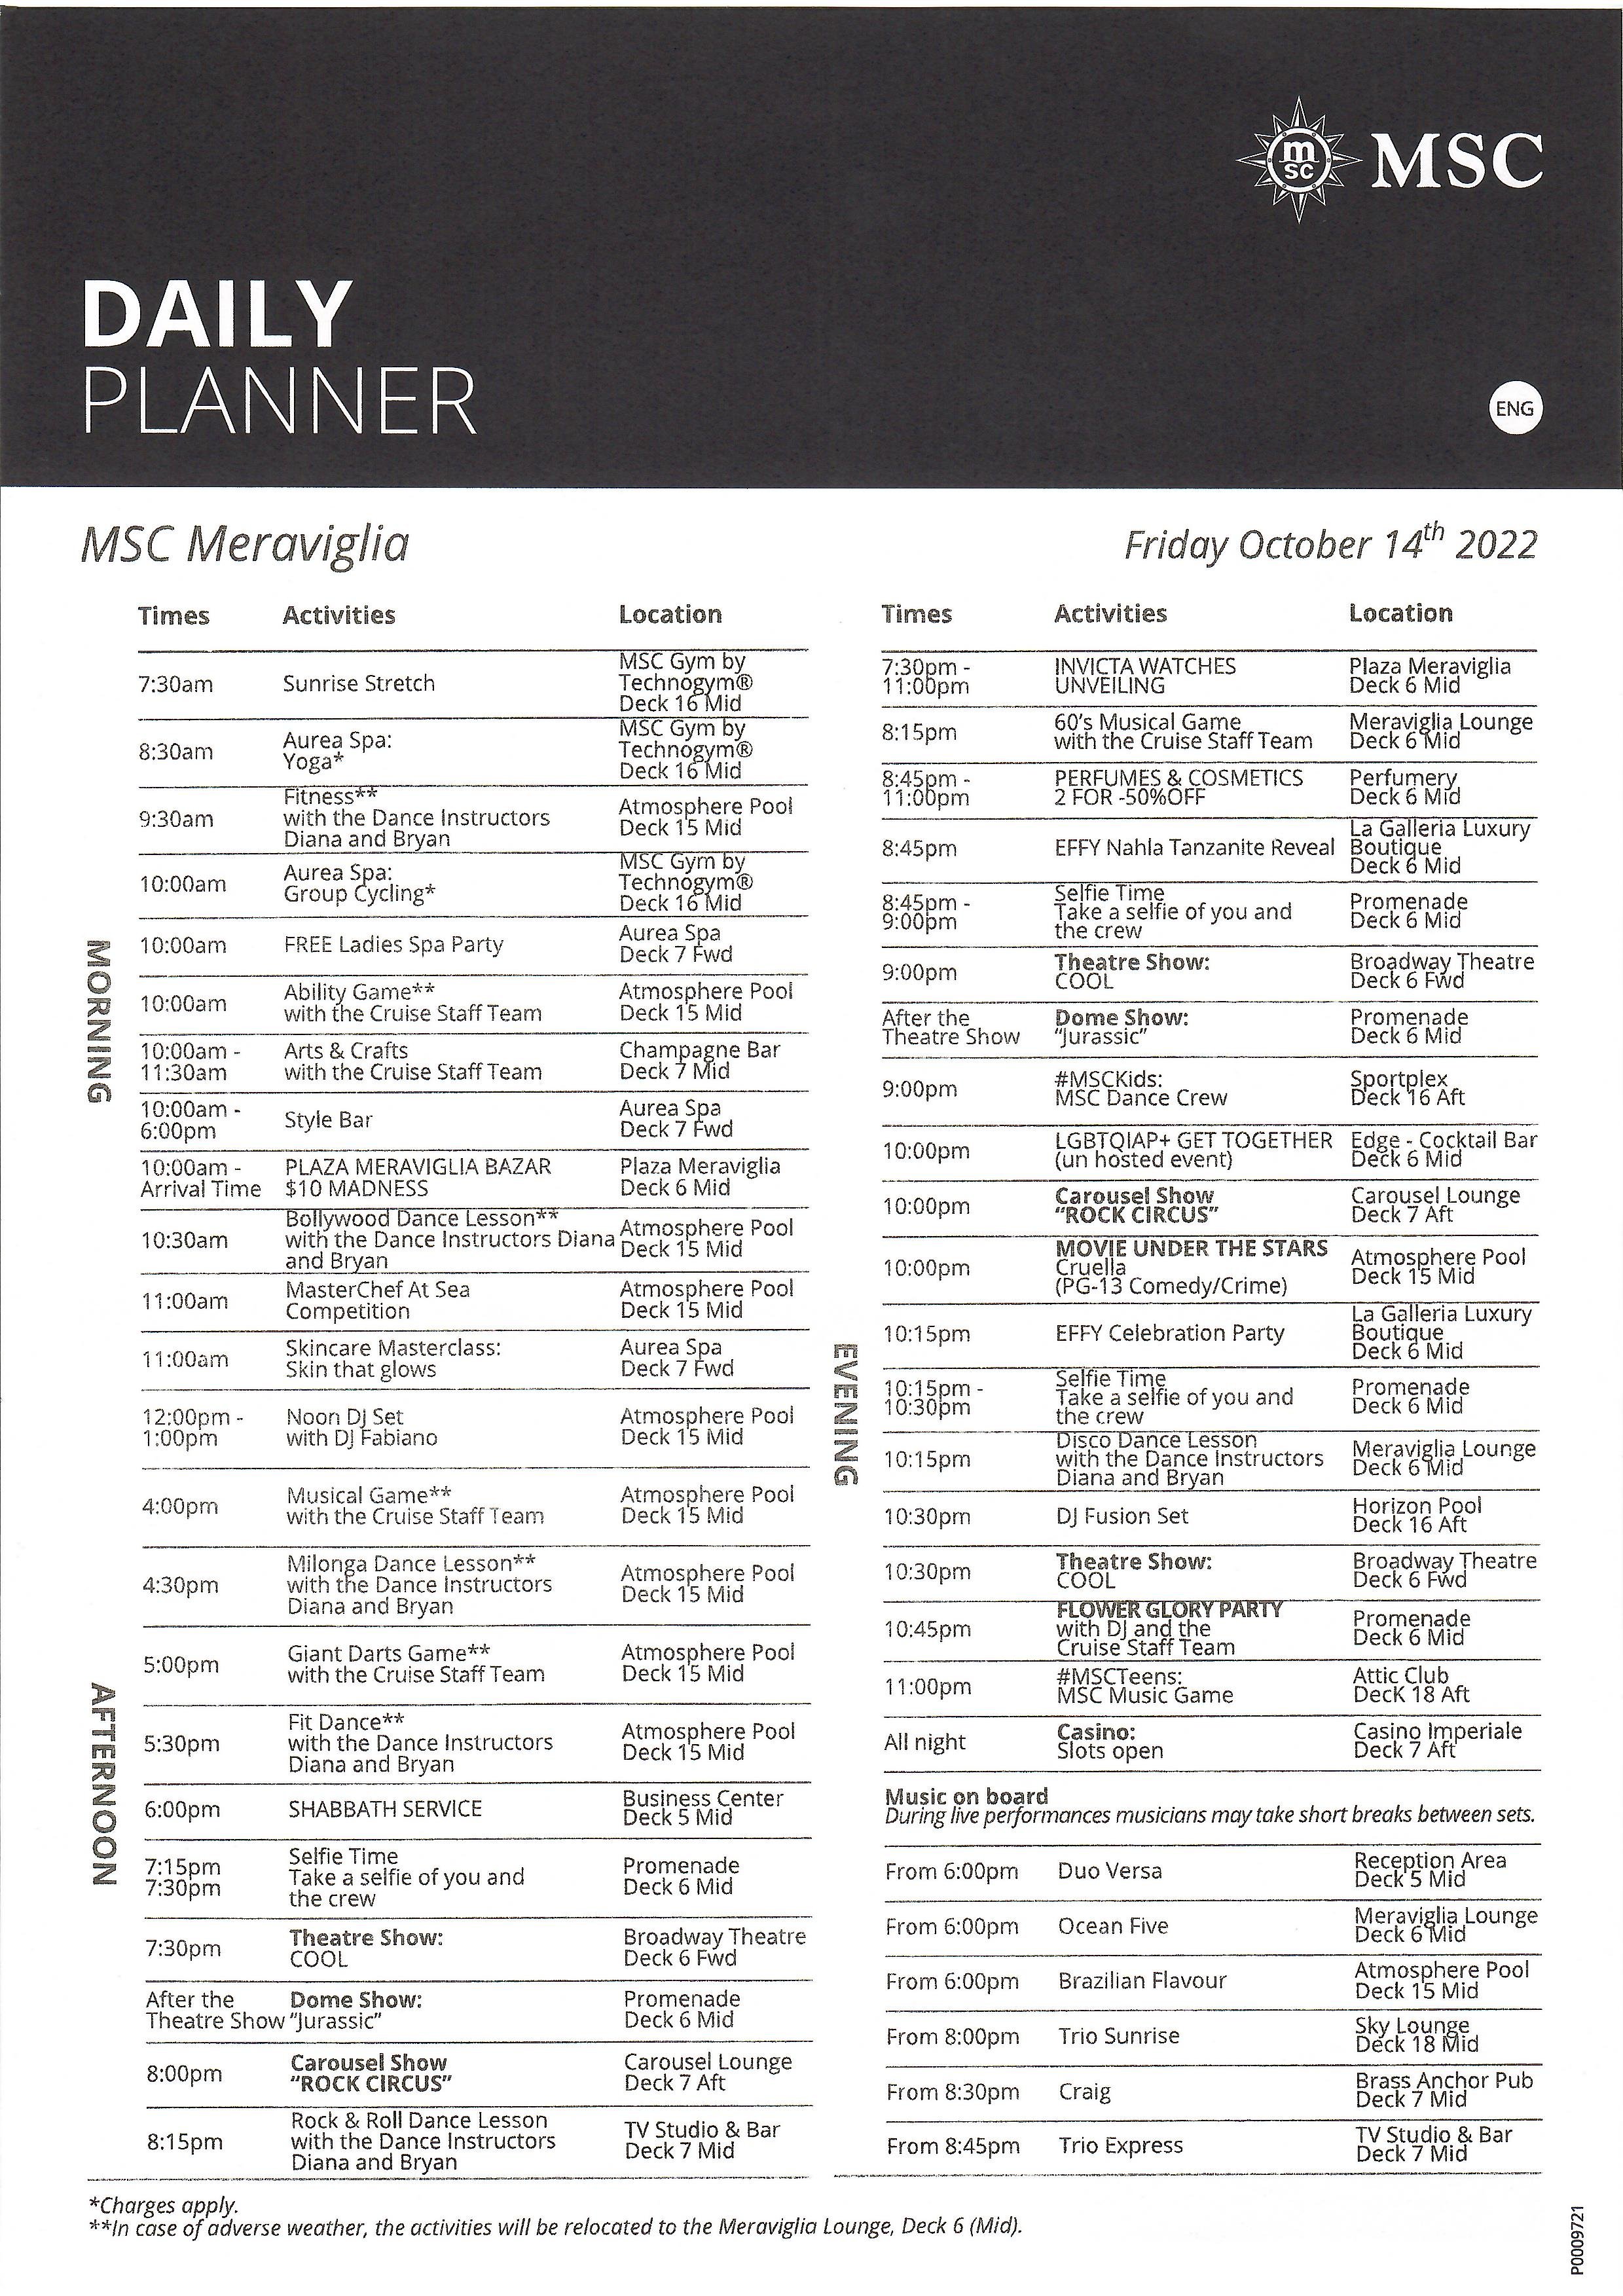 Daily Planner -Nassau - October 14, 2022 page 01.jpg